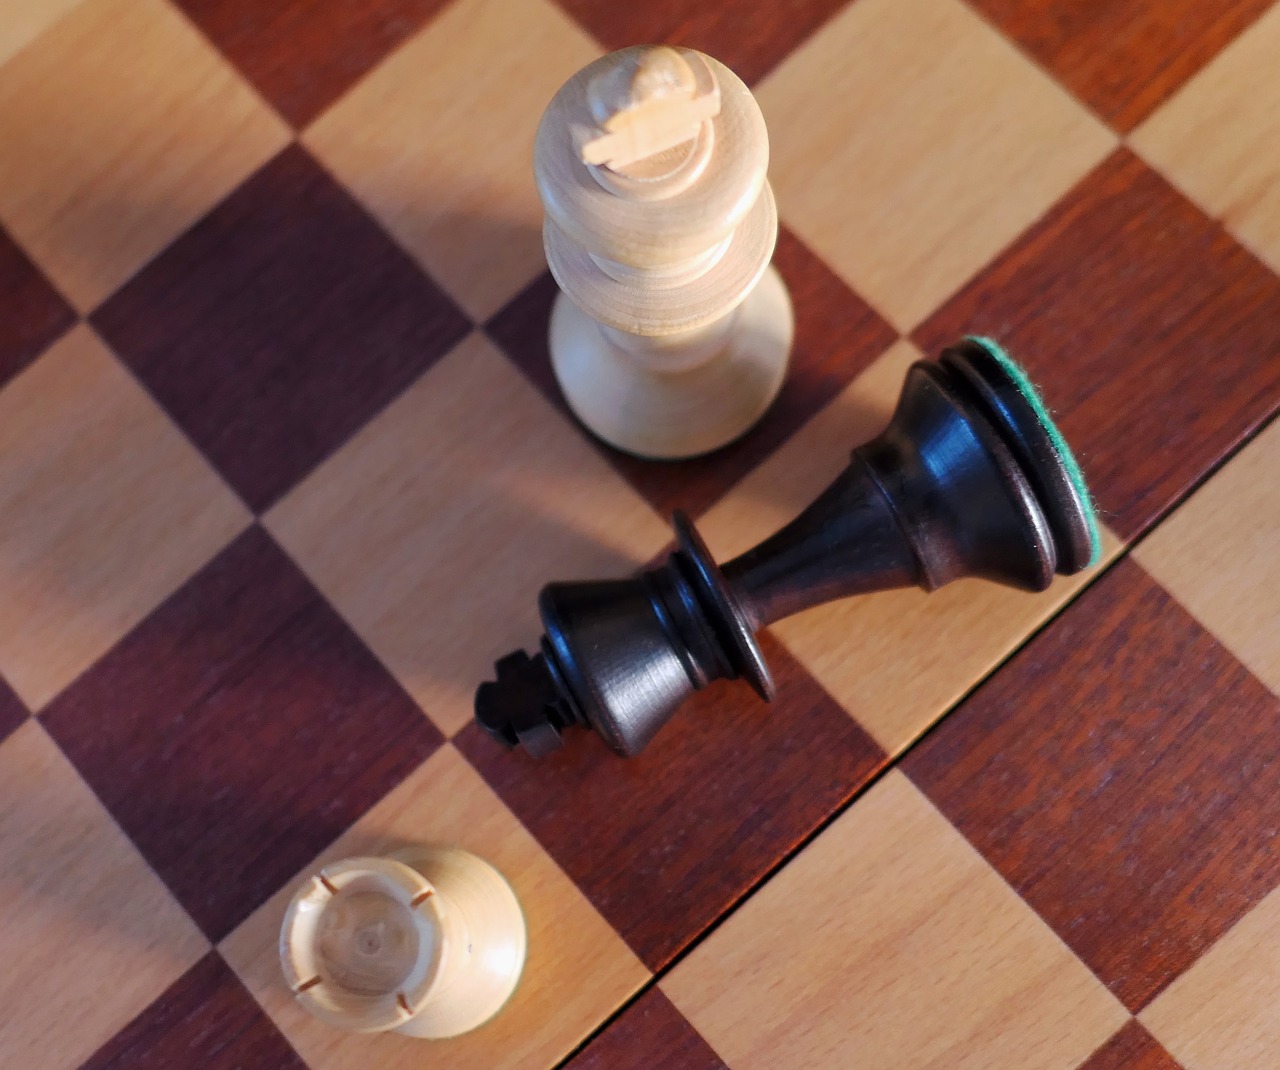 chess  denksport  mind game free photo